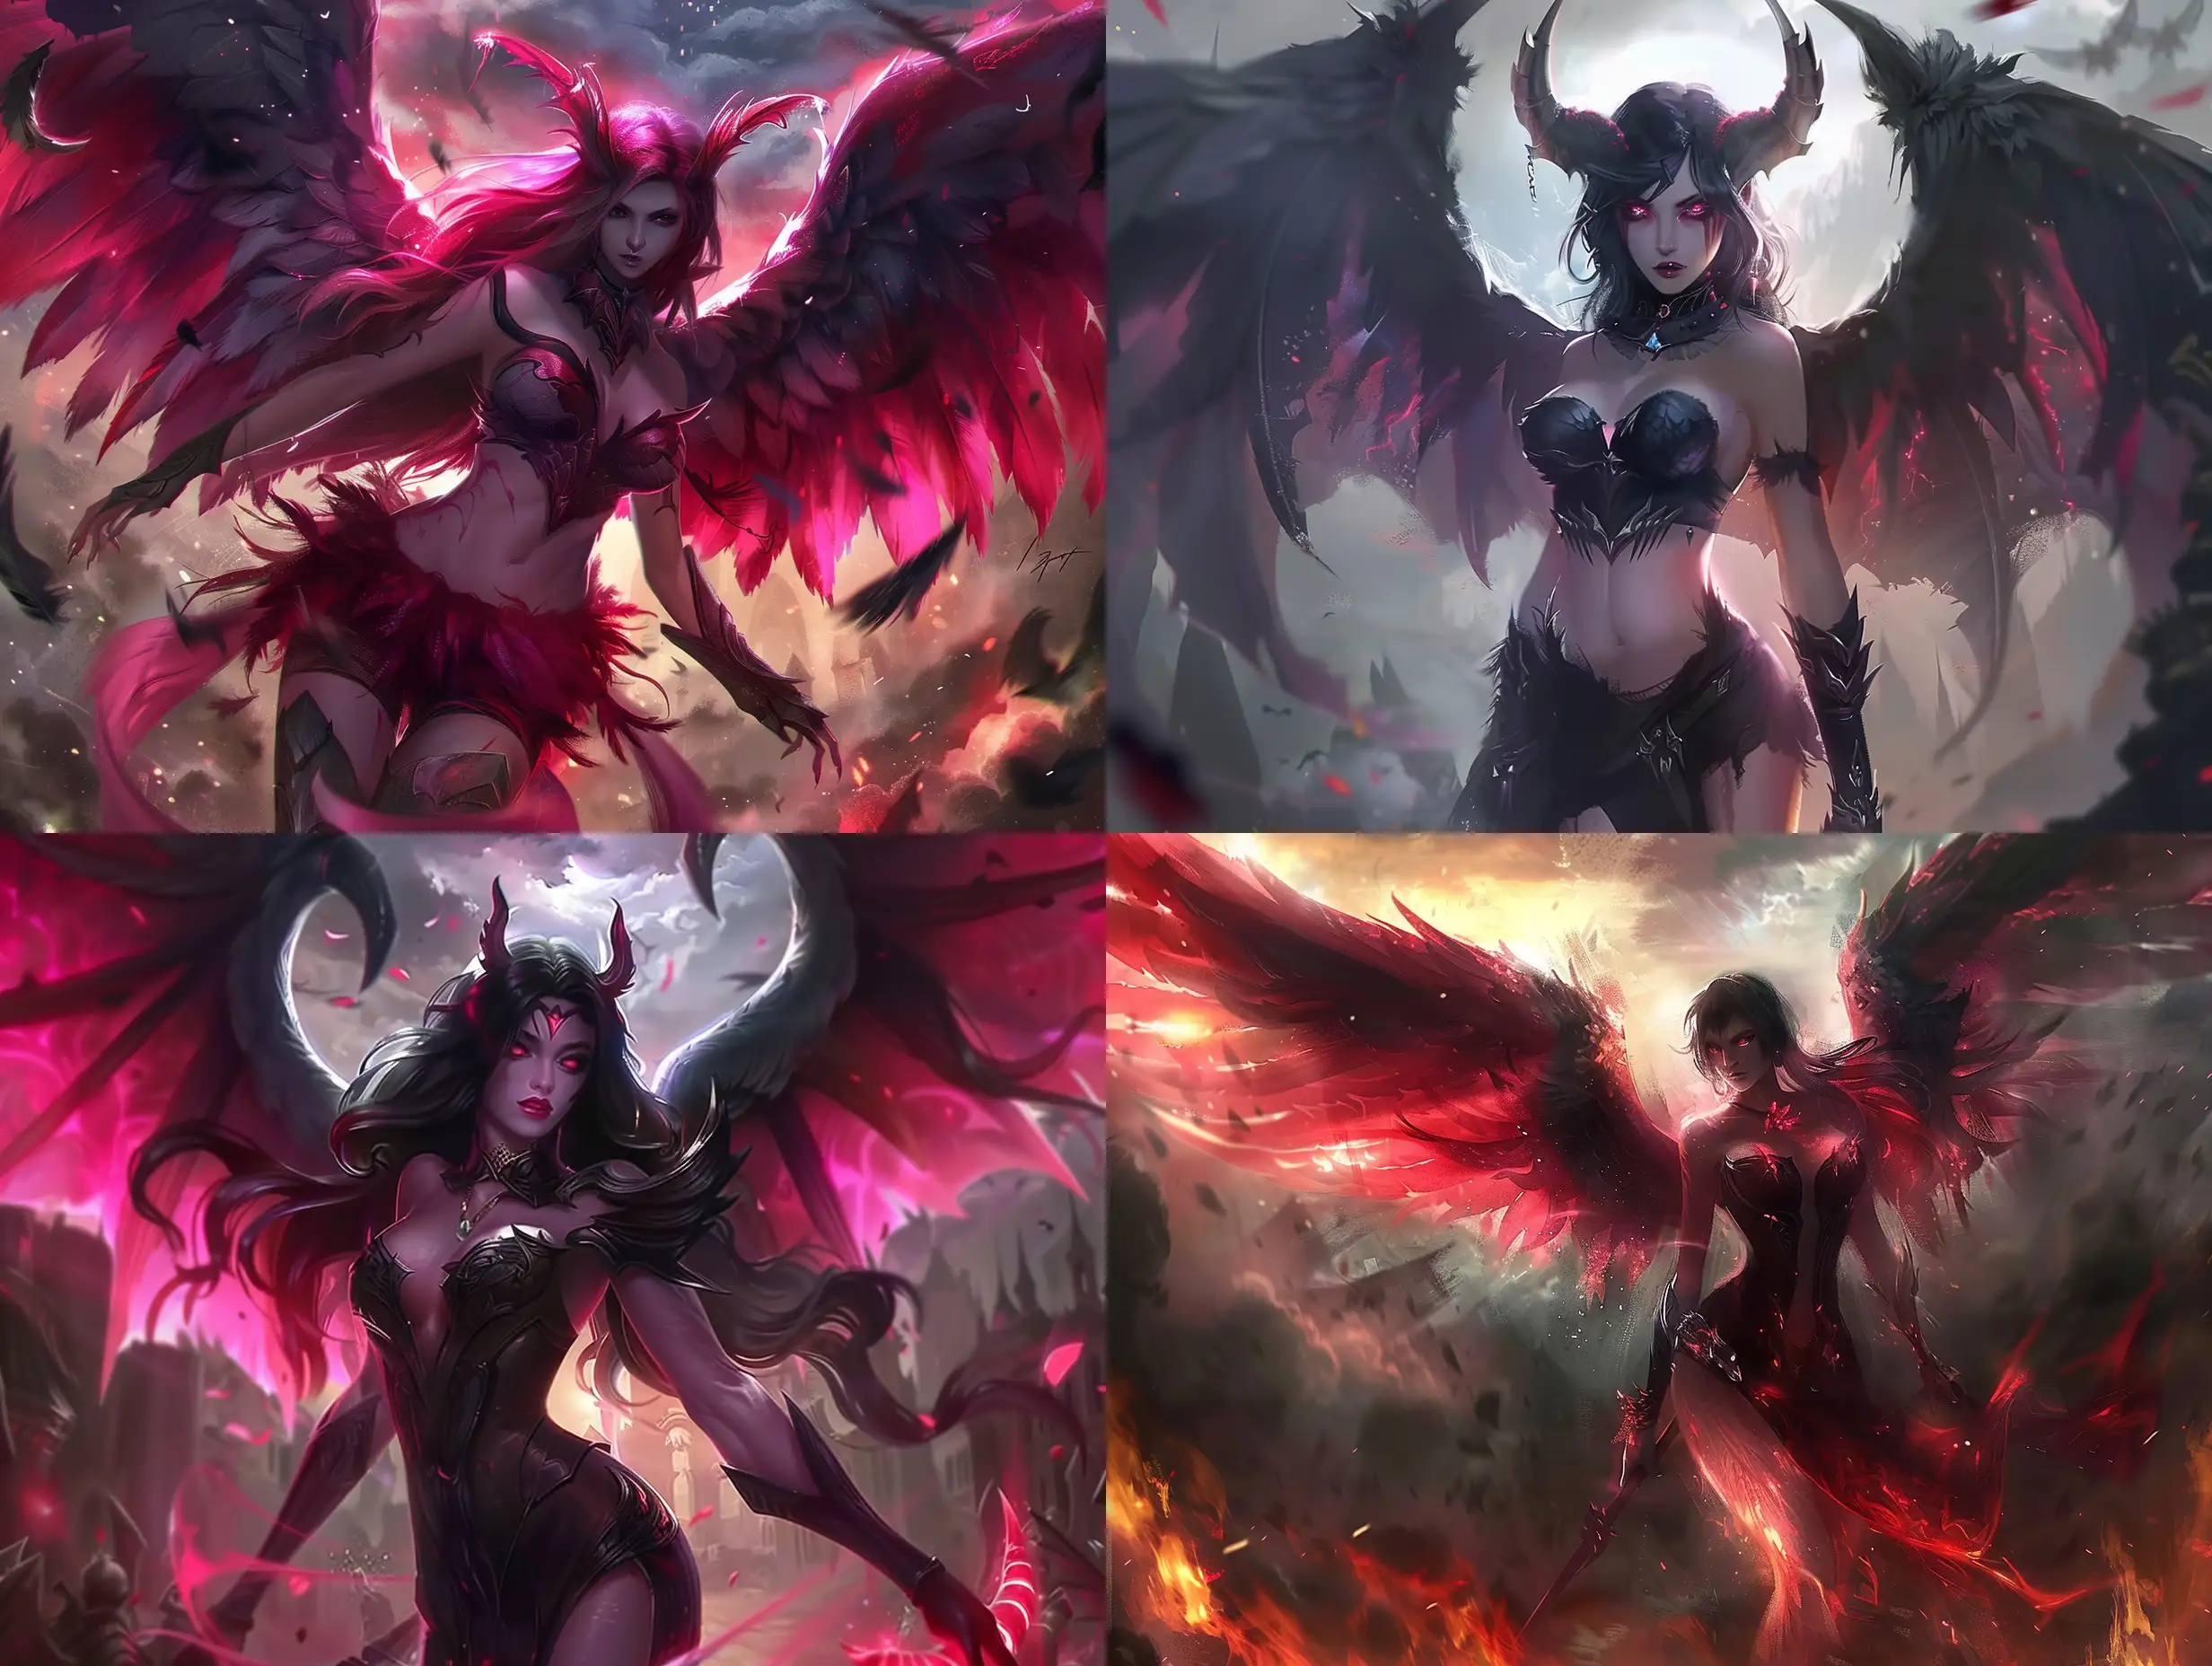 Half-Demon-Half-Angel-Girl-League-of-Legends-Splash-Art-Style